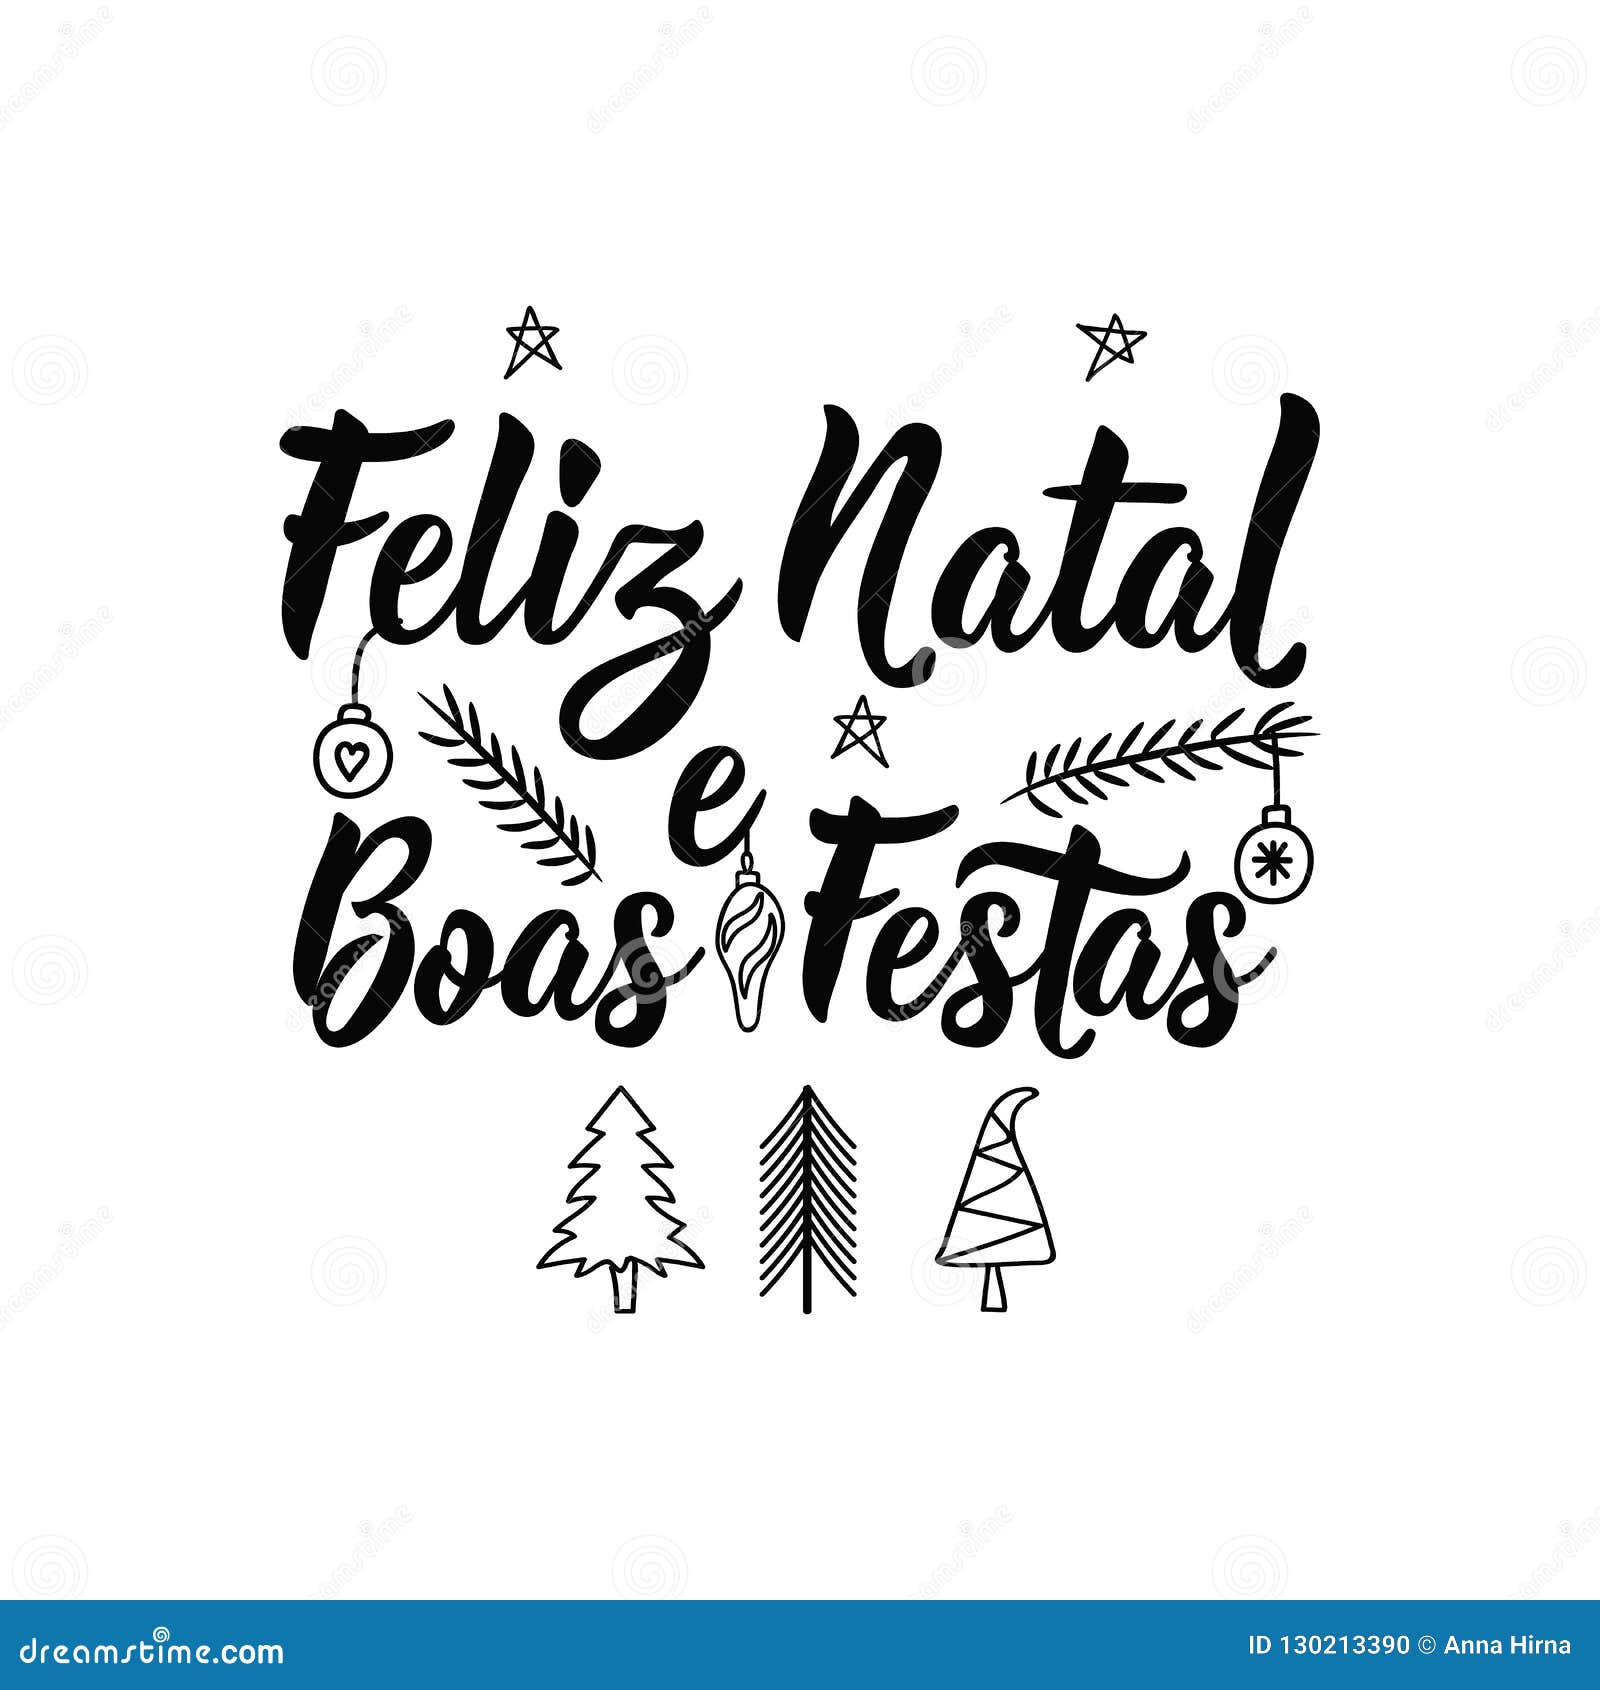 merry christmas and happy holidays in portugues. feliz natal e boas festas. lettering.